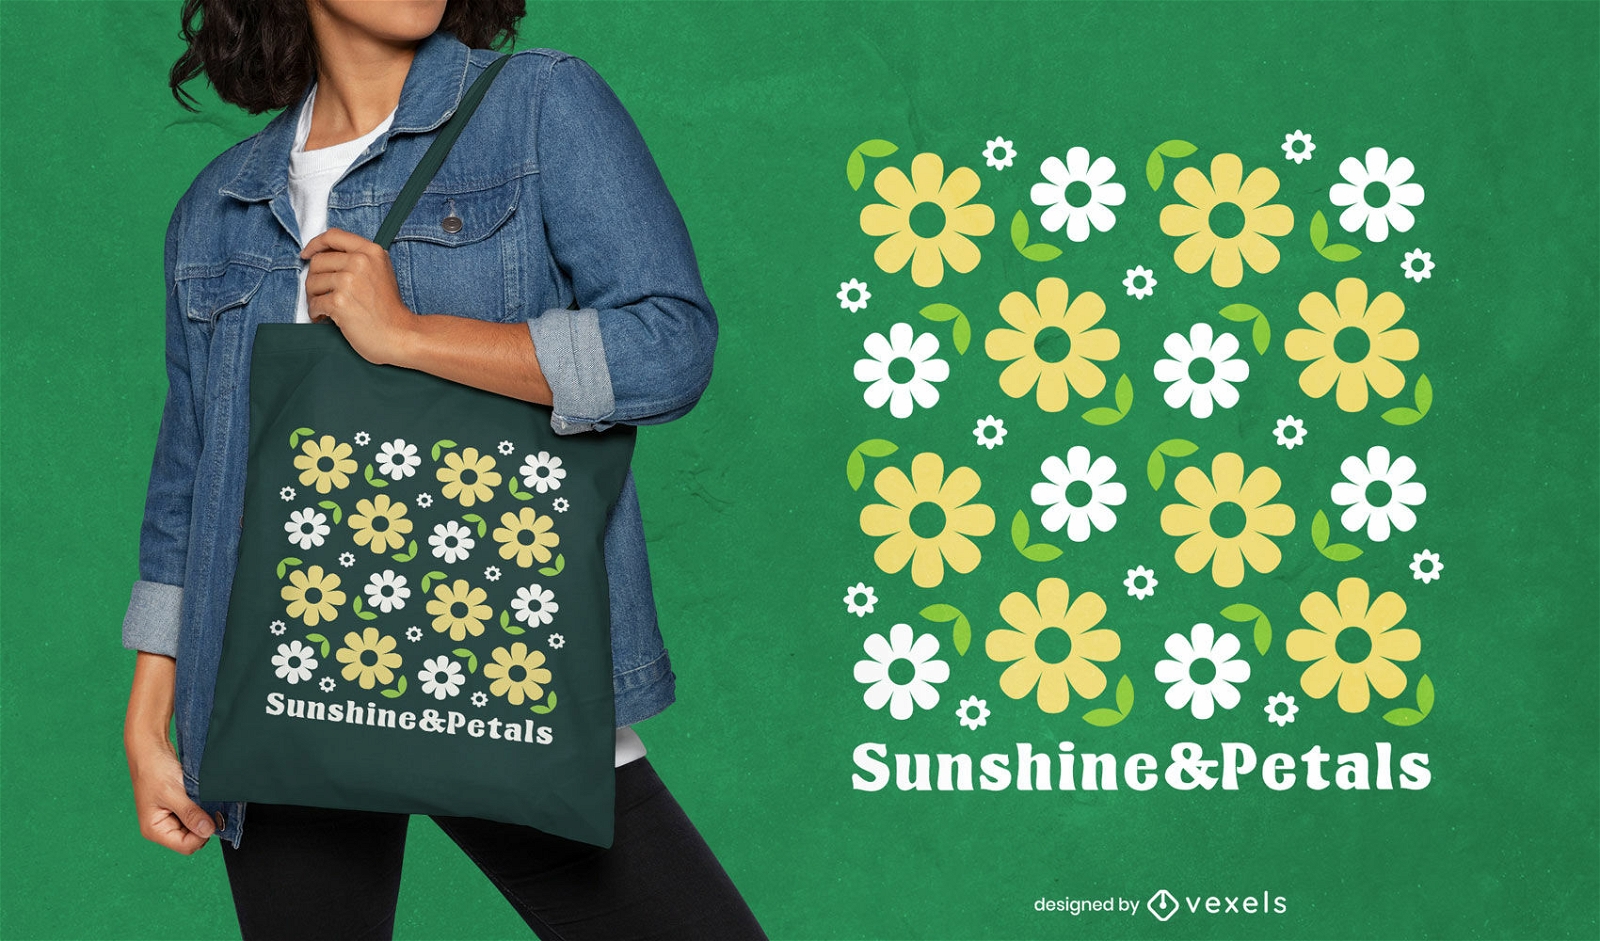 Sunshine & petals tote bag design